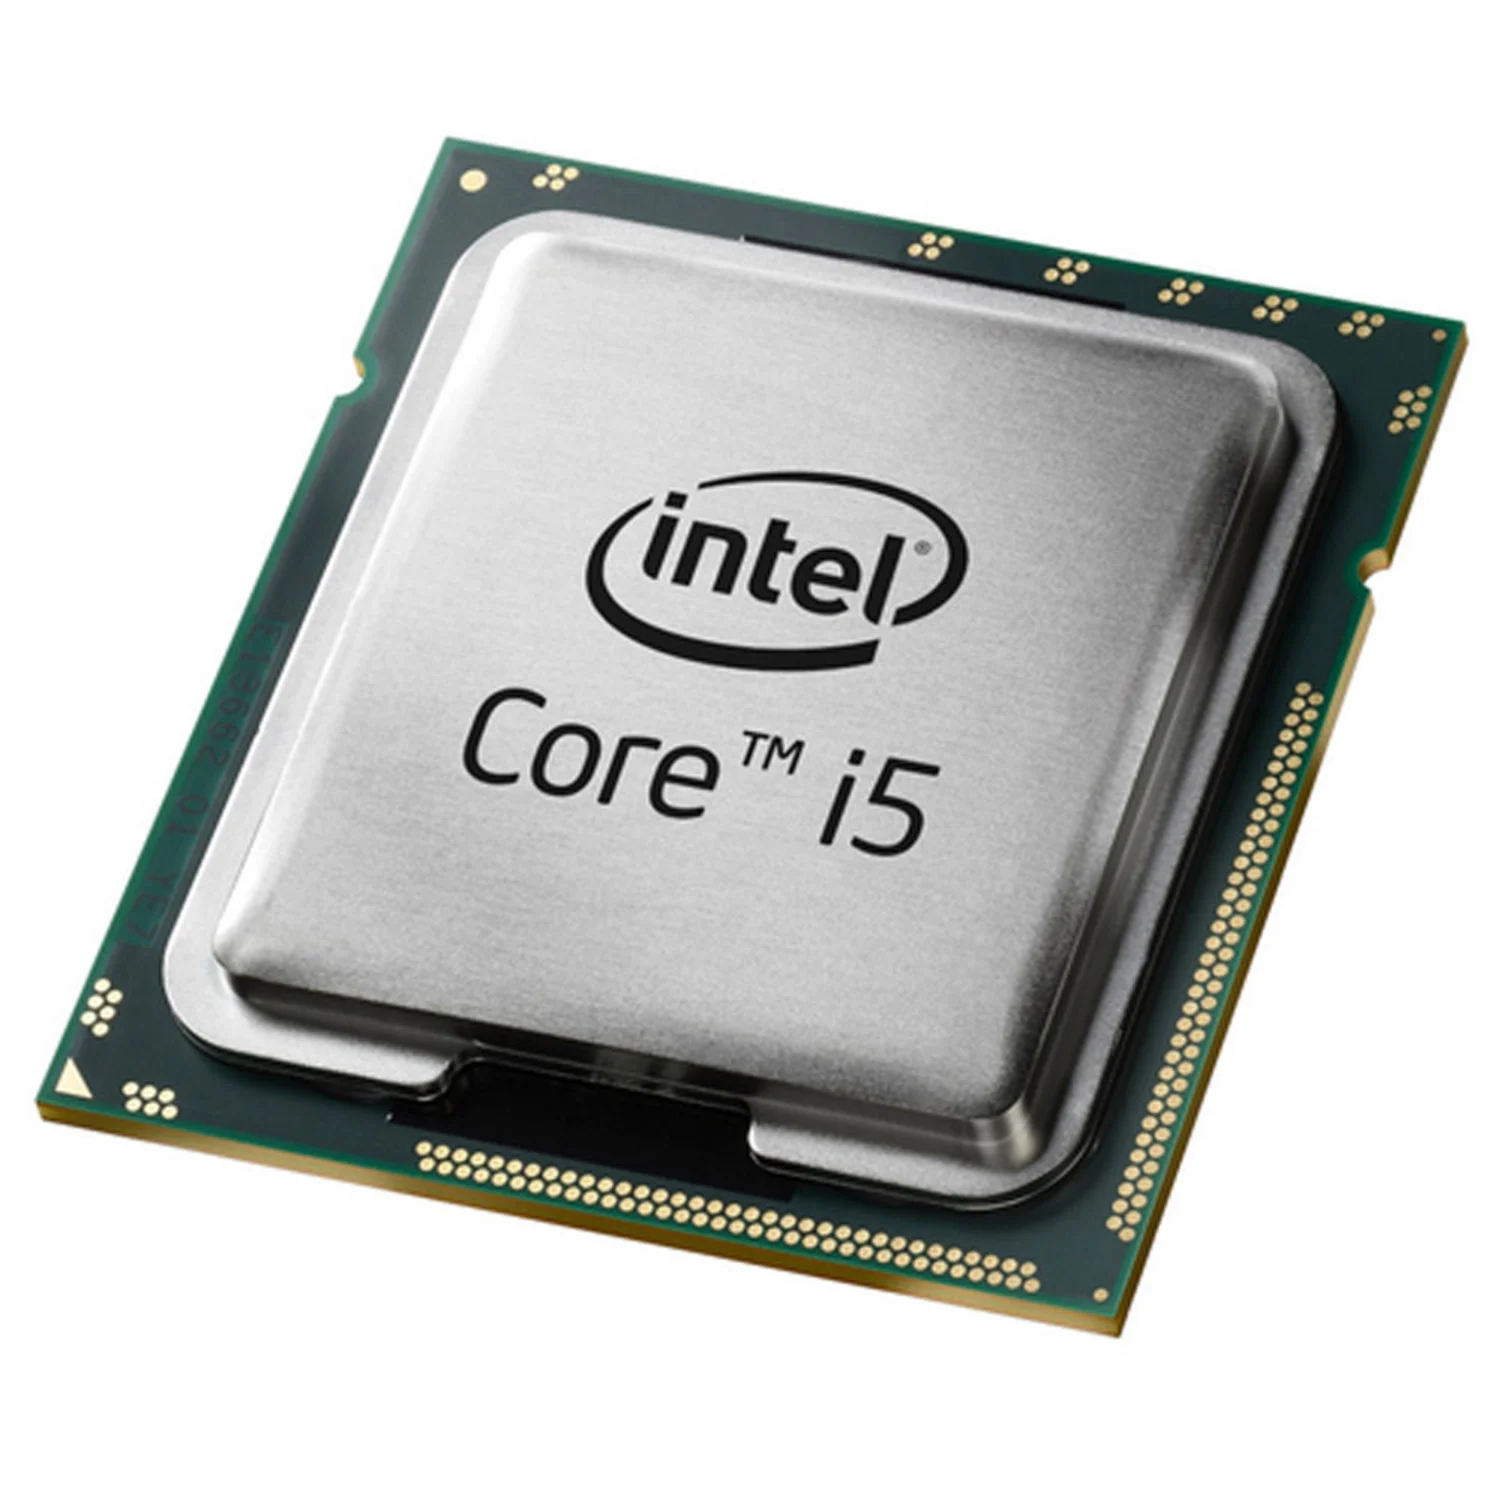 Processador Intel Core i5 4590S Socket 1150 4 Core 4 Threads 3.0GHz Turbo 3.7GHz - OEM